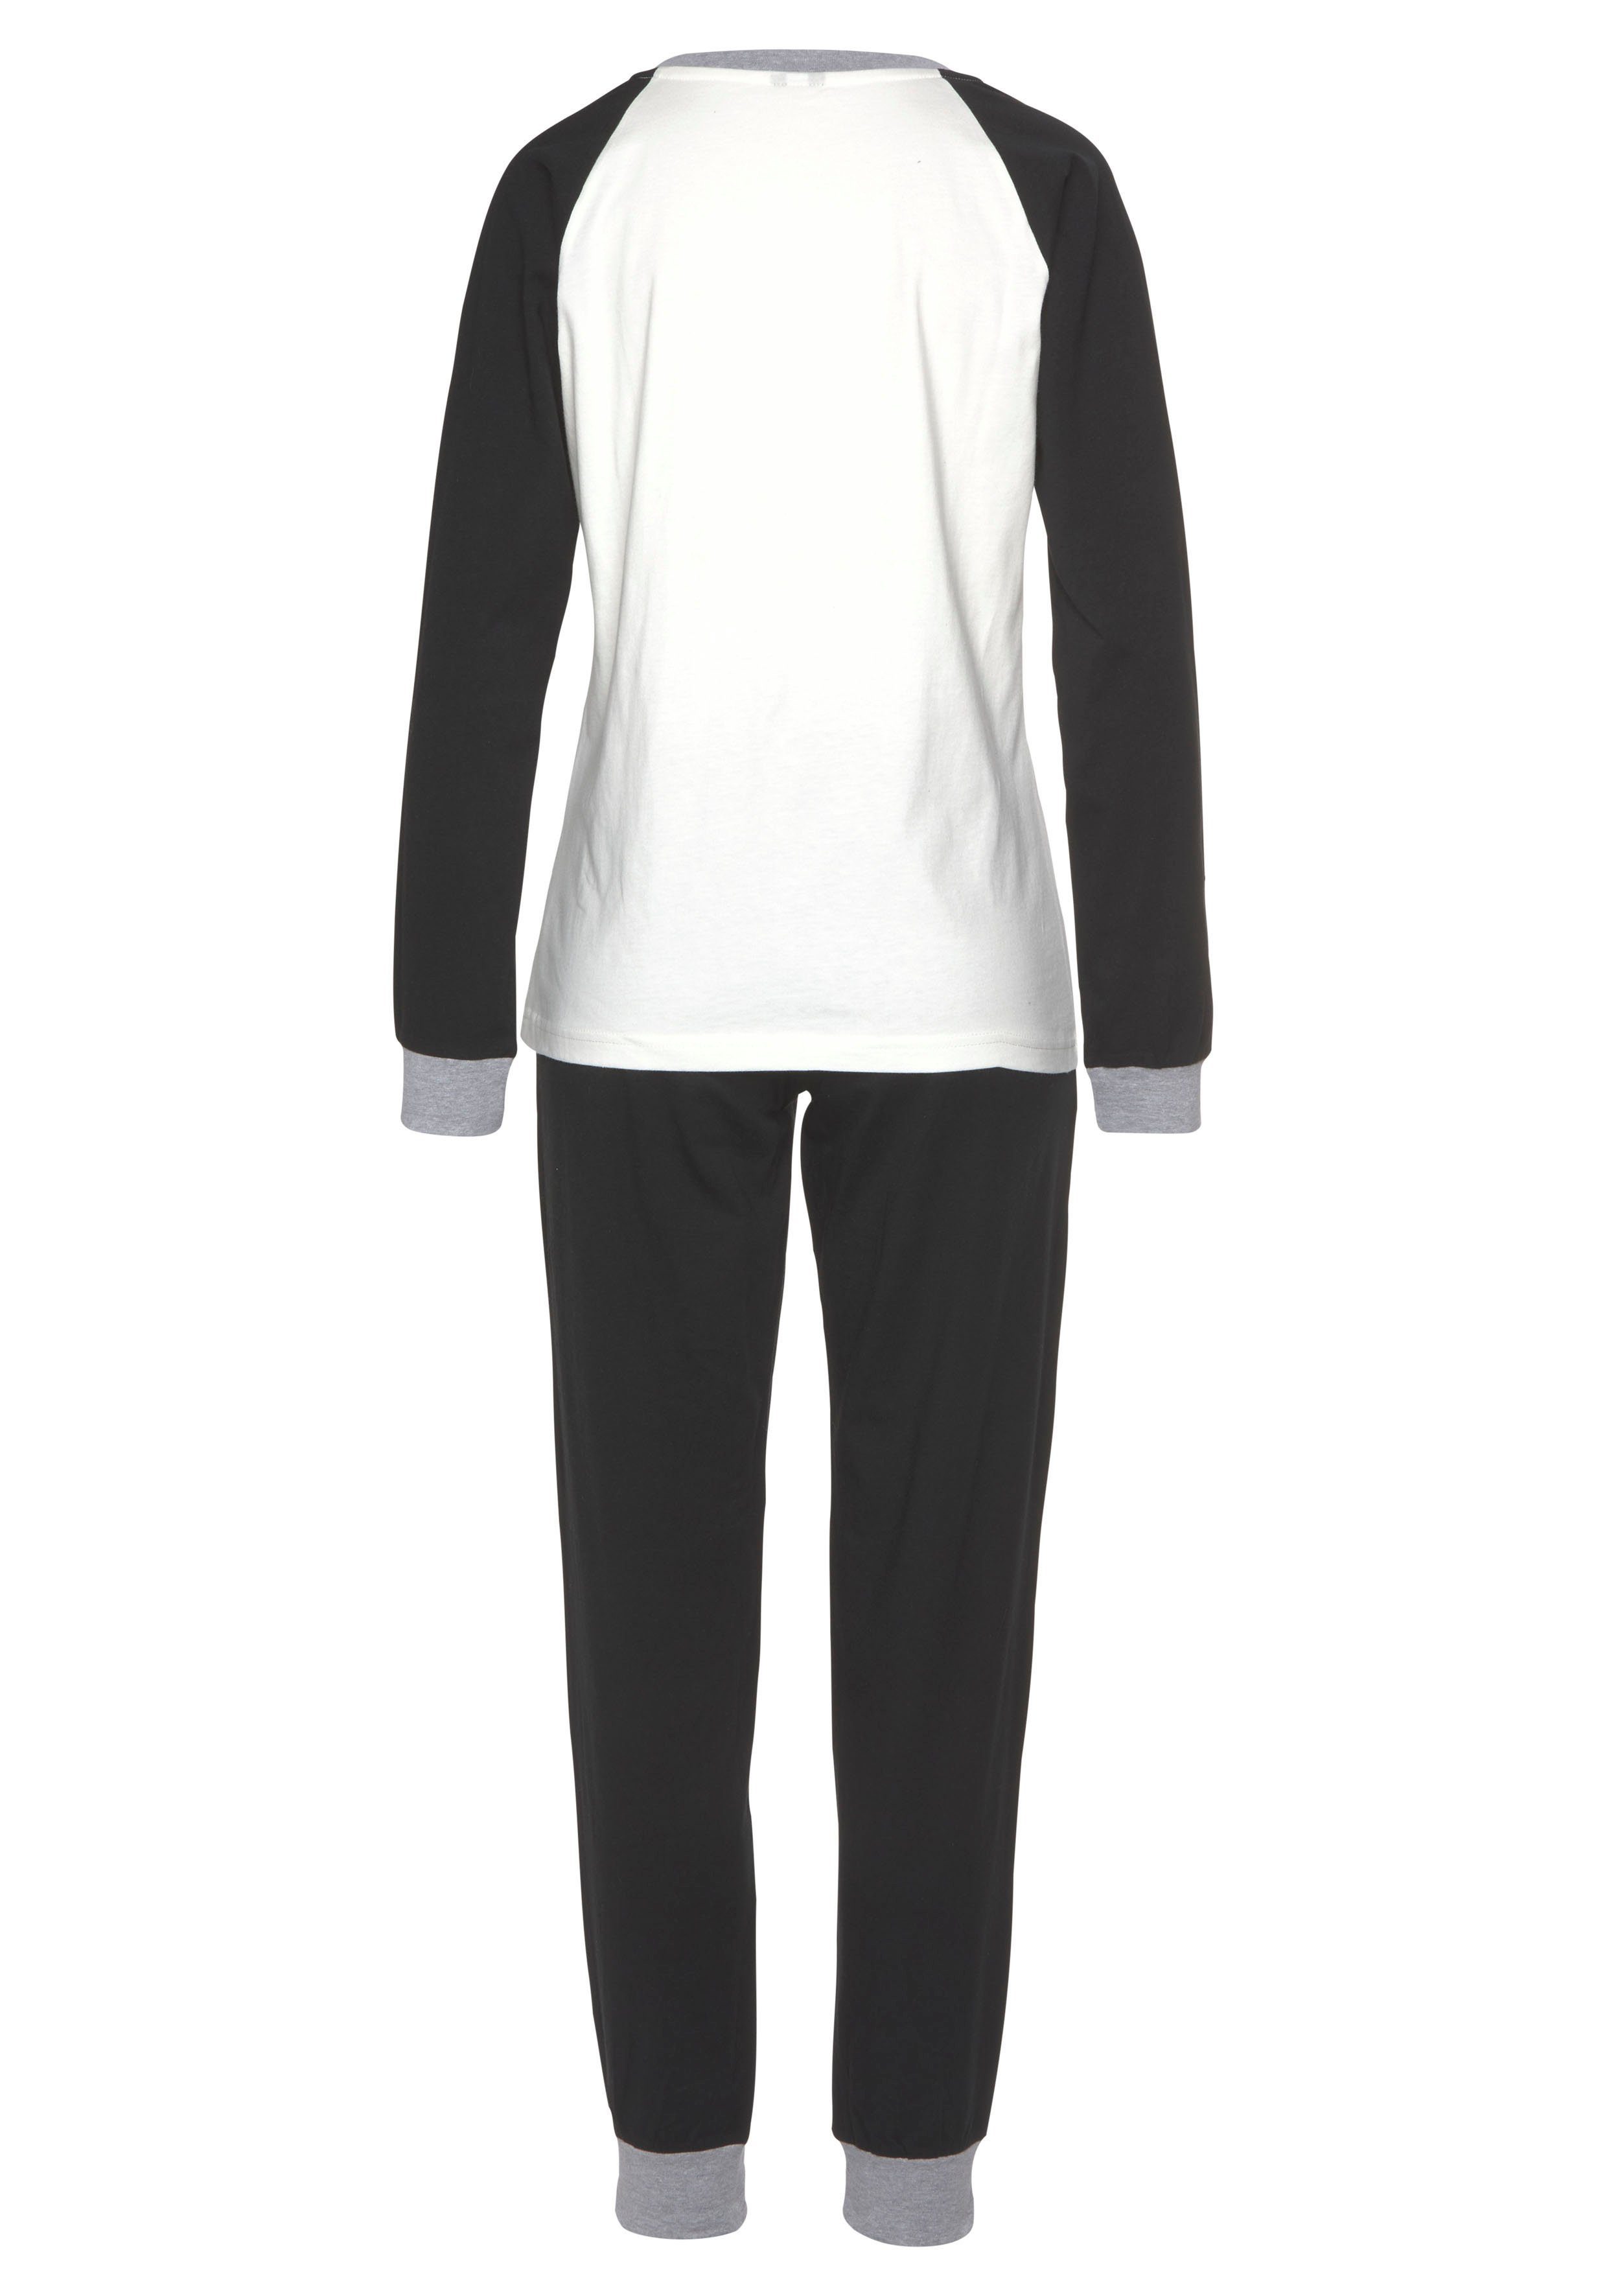 Pyjama 1 KangaROOS (2 Stück) kontrastfarbenen schwarz-weiß tlg., mit Raglanärmeln